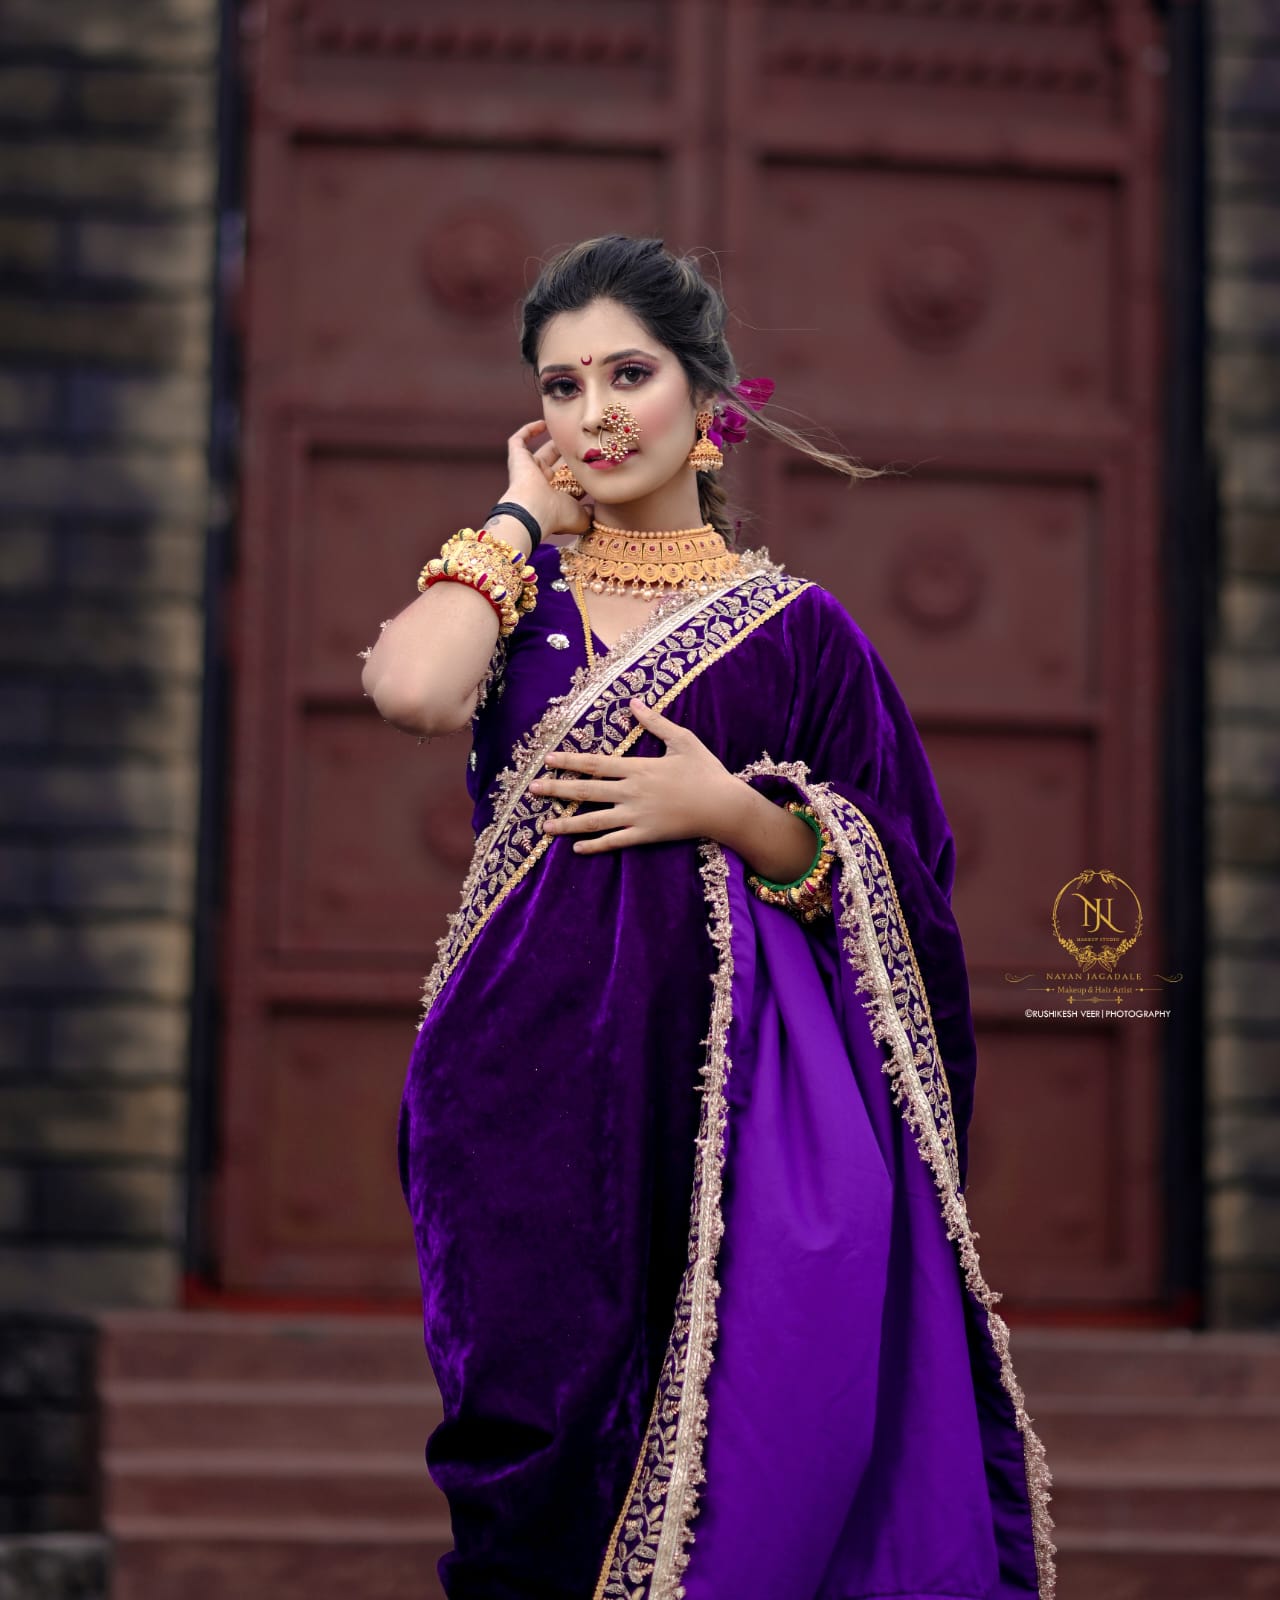 Stitched Nauvari saree in Peshwai style - Peshwai Nauwar